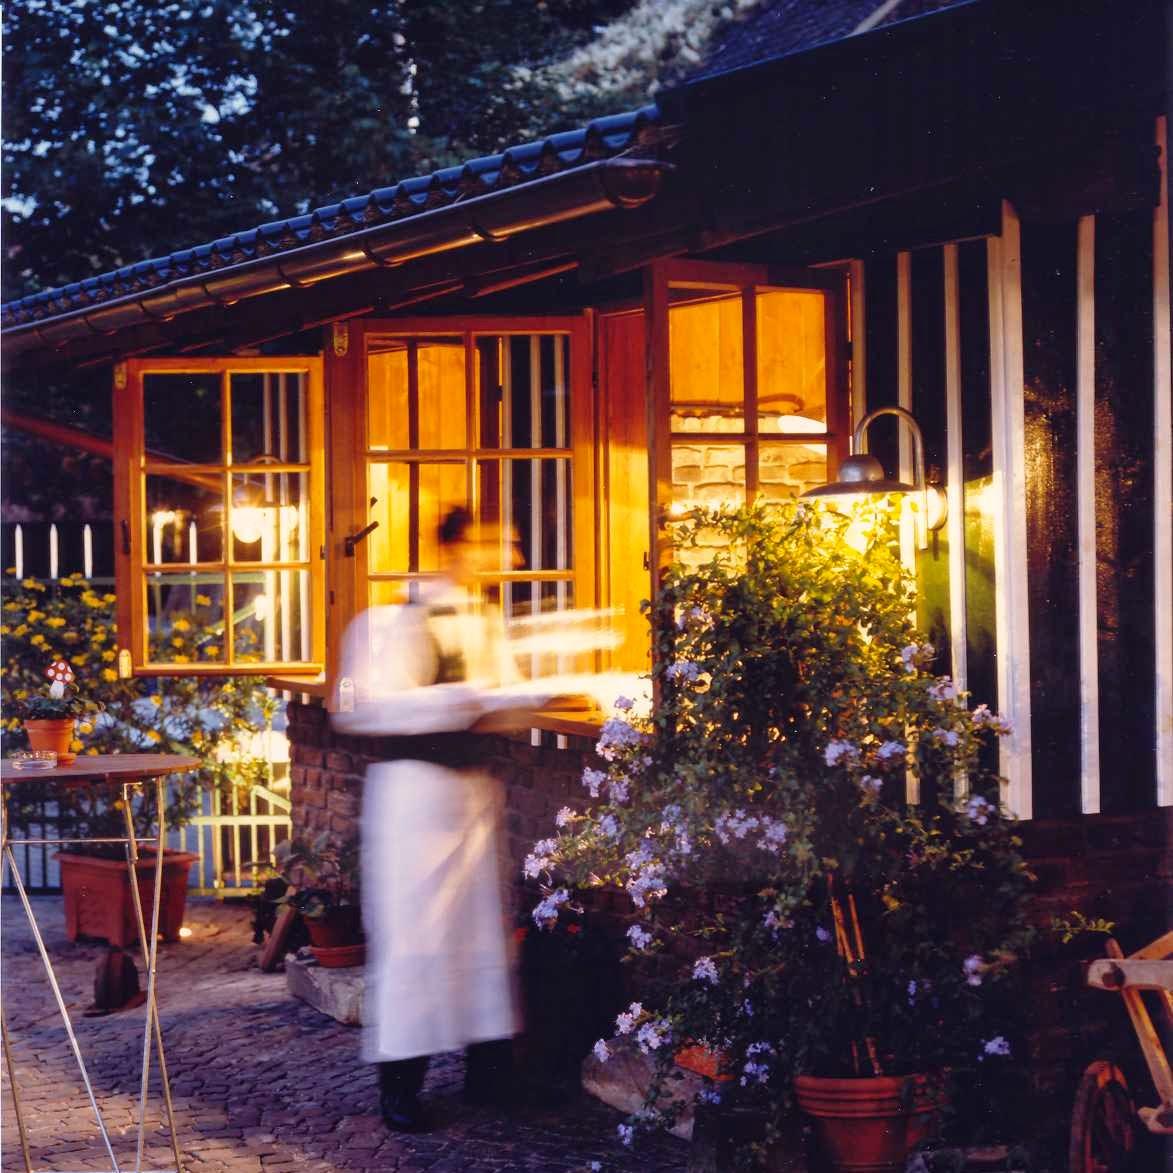 Restaurant "Wellings Romantik Hotel zur Linde" in Moers